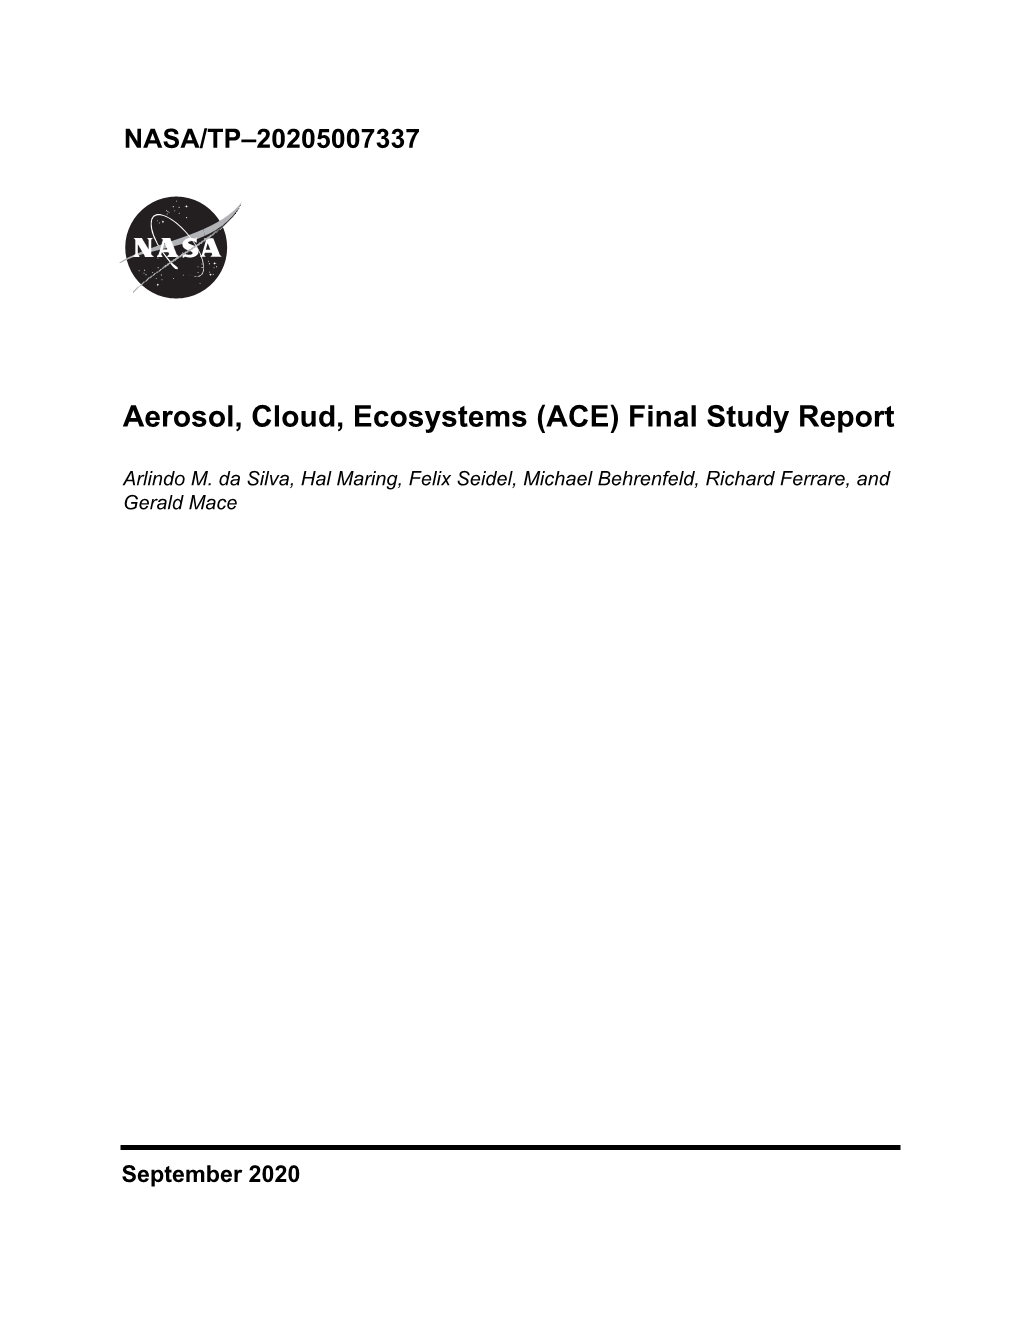 Aerosol, Cloud, Ecosystems (ACE) Final Study Report